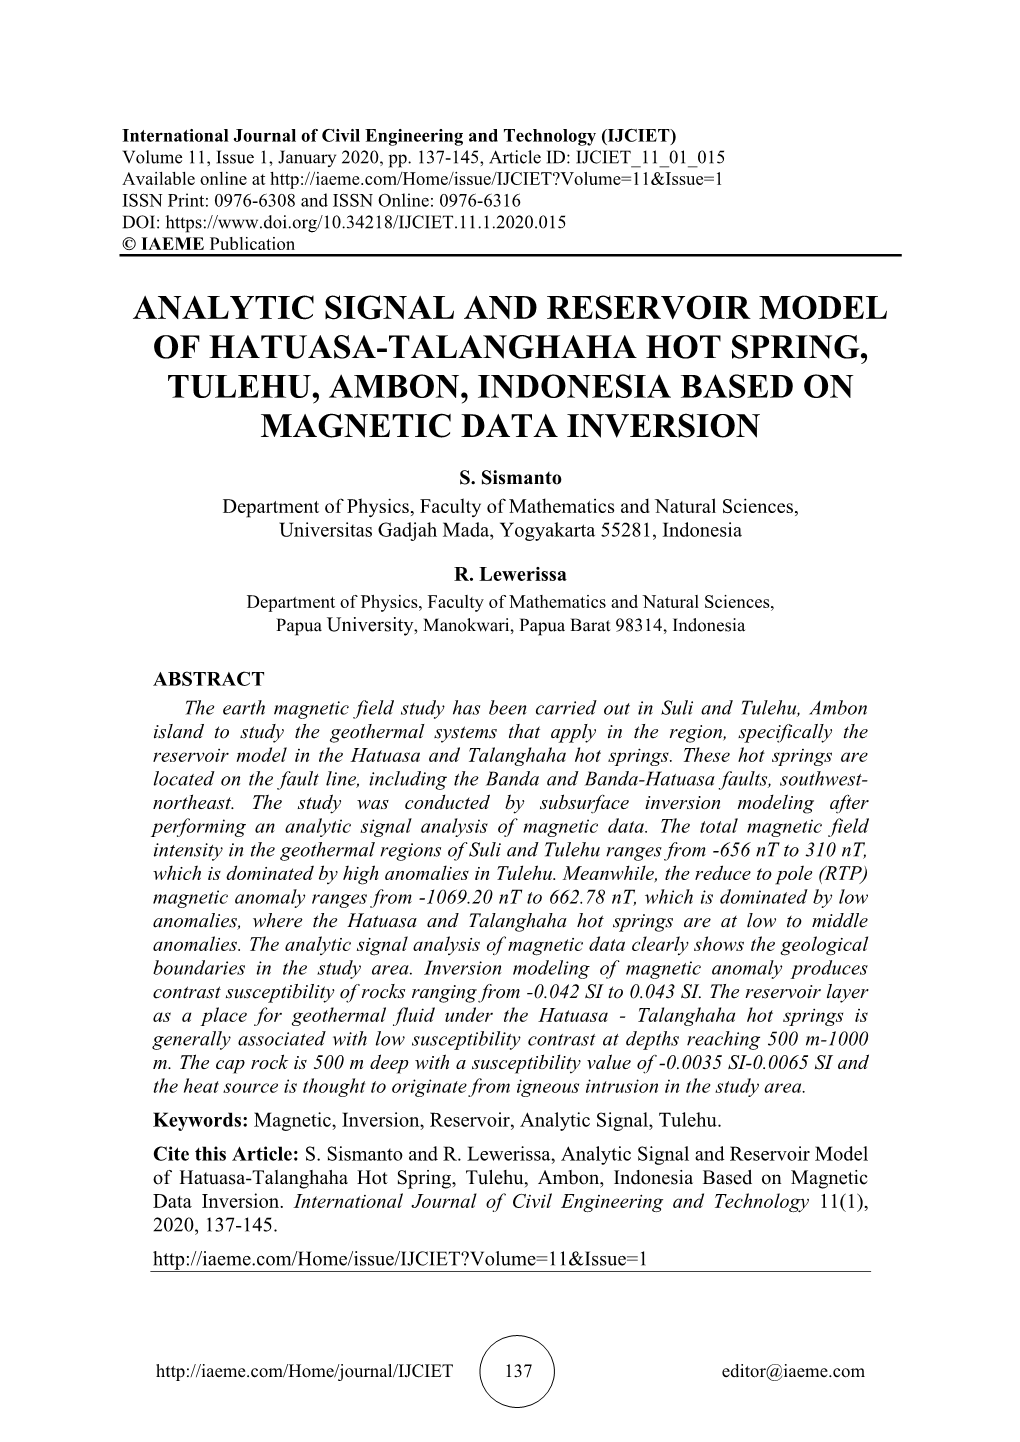 Analytic Signal and Reservoir Model of Hatuasa-Talanghaha Hot Spring, Tulehu, Ambon, Indonesia Based on Magnetic Data Inversion